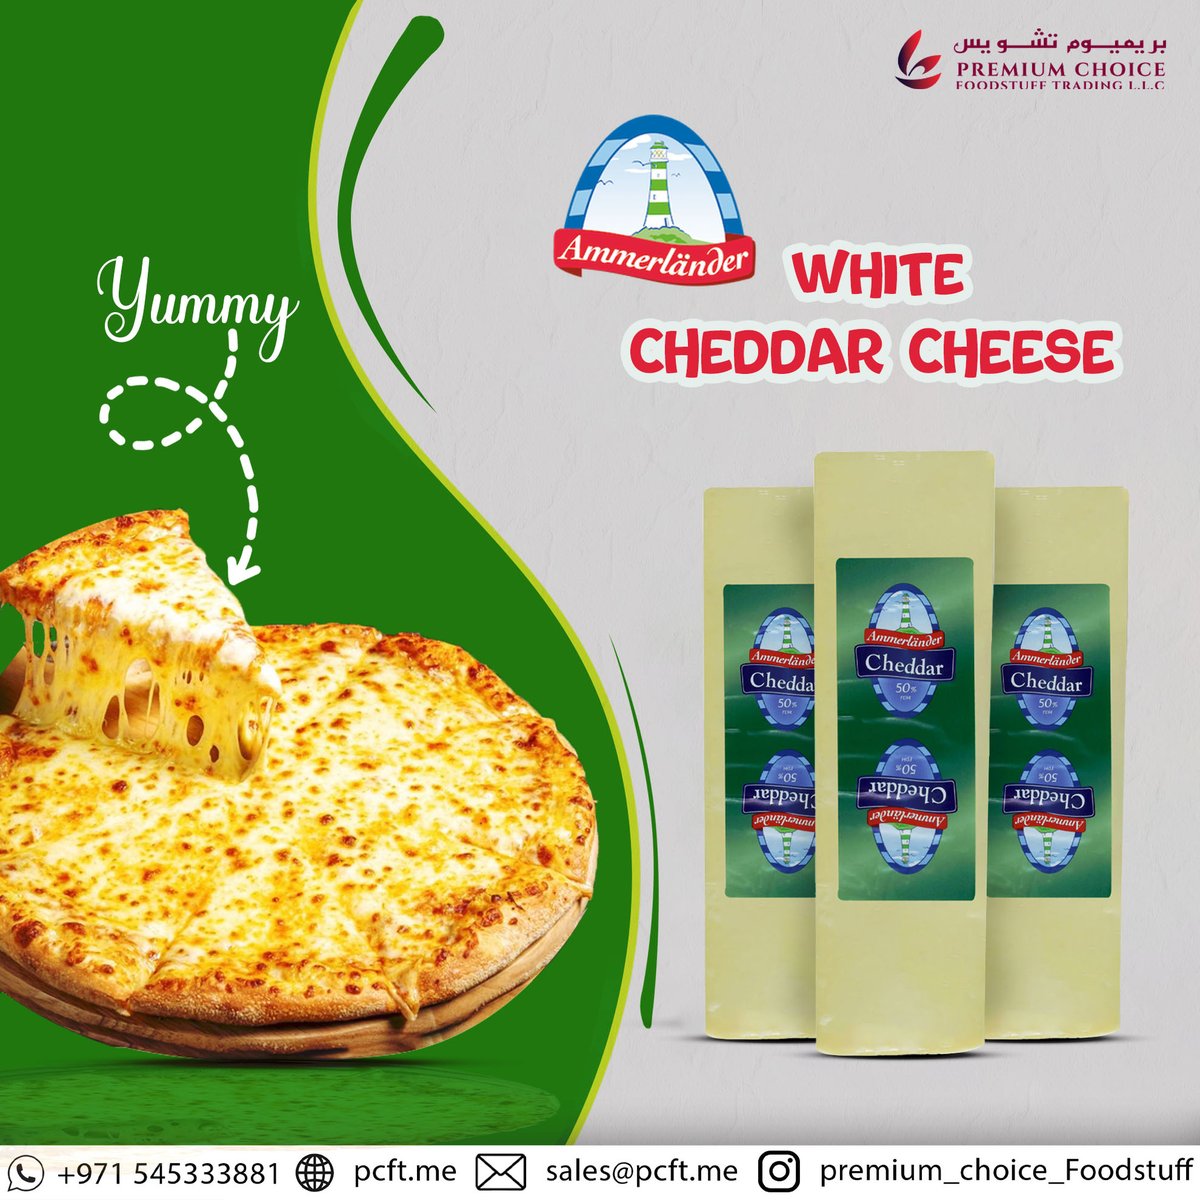 White Cheddar Cheese

Ammerland  | Premium choice Foodstuff Trading 
.
.
.
.
#PremiumChoice #CheddarCheese #DubaiDelicacies #GourmetCheese #CheeseLovers #UAEFoodie #DubaiGourmet #QualityCheese #FoodstuffTrading #LuxuryTaste #CheeseIndulgence #DubaiCheese #PremiumFoodstuff